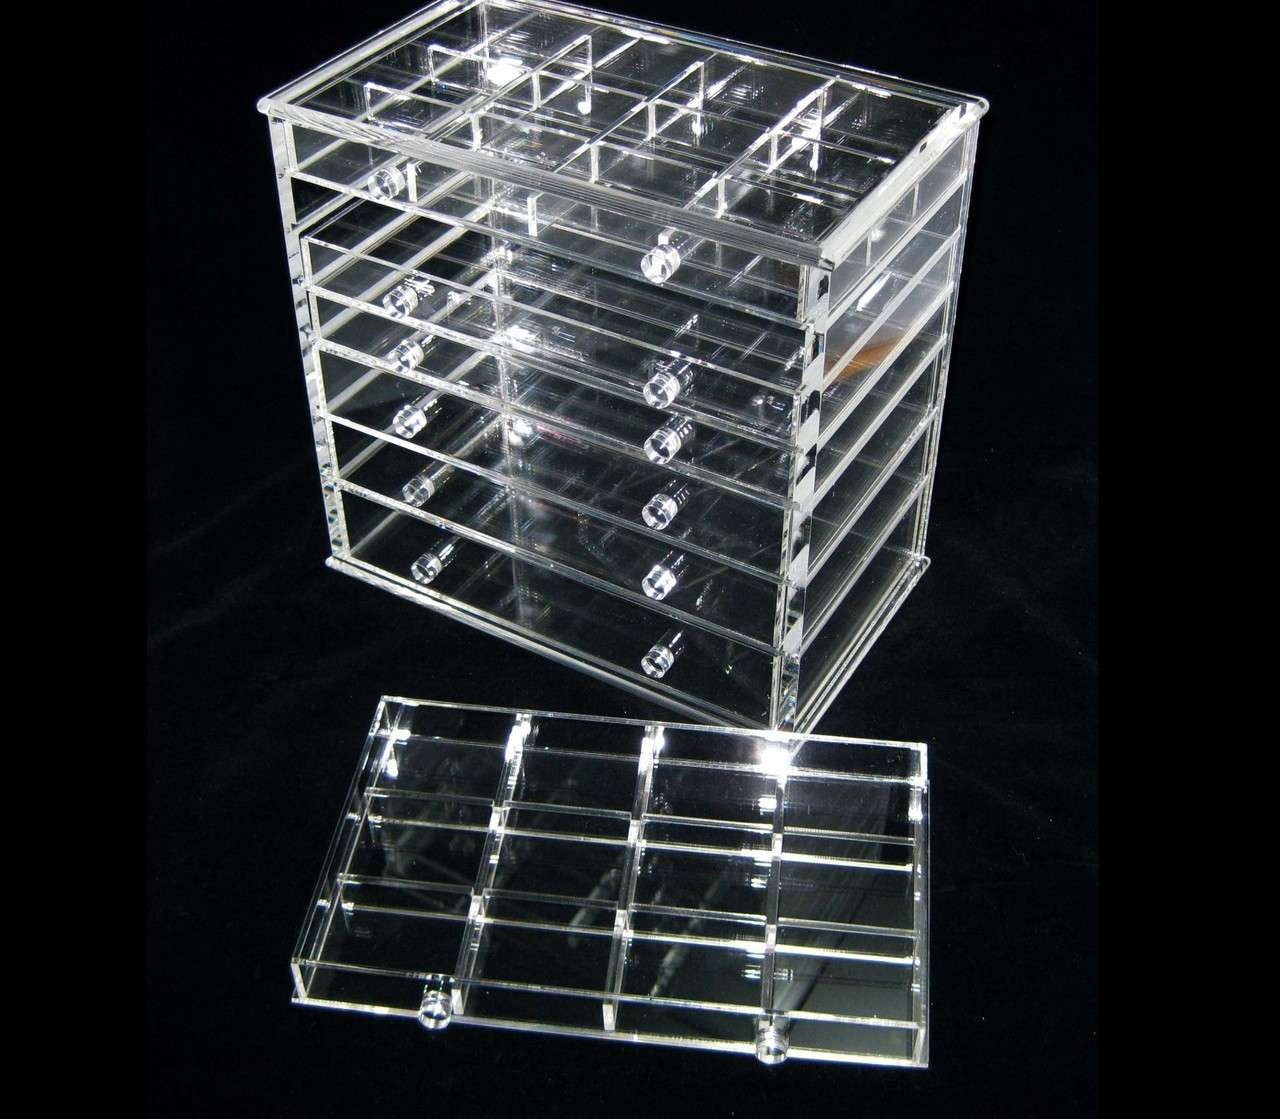 Acrylic Cosmetic Makeup Organizer Jewelry Box Storage Set - 7 Drawers, 6.5  x 11 - Smith's Food and Drug